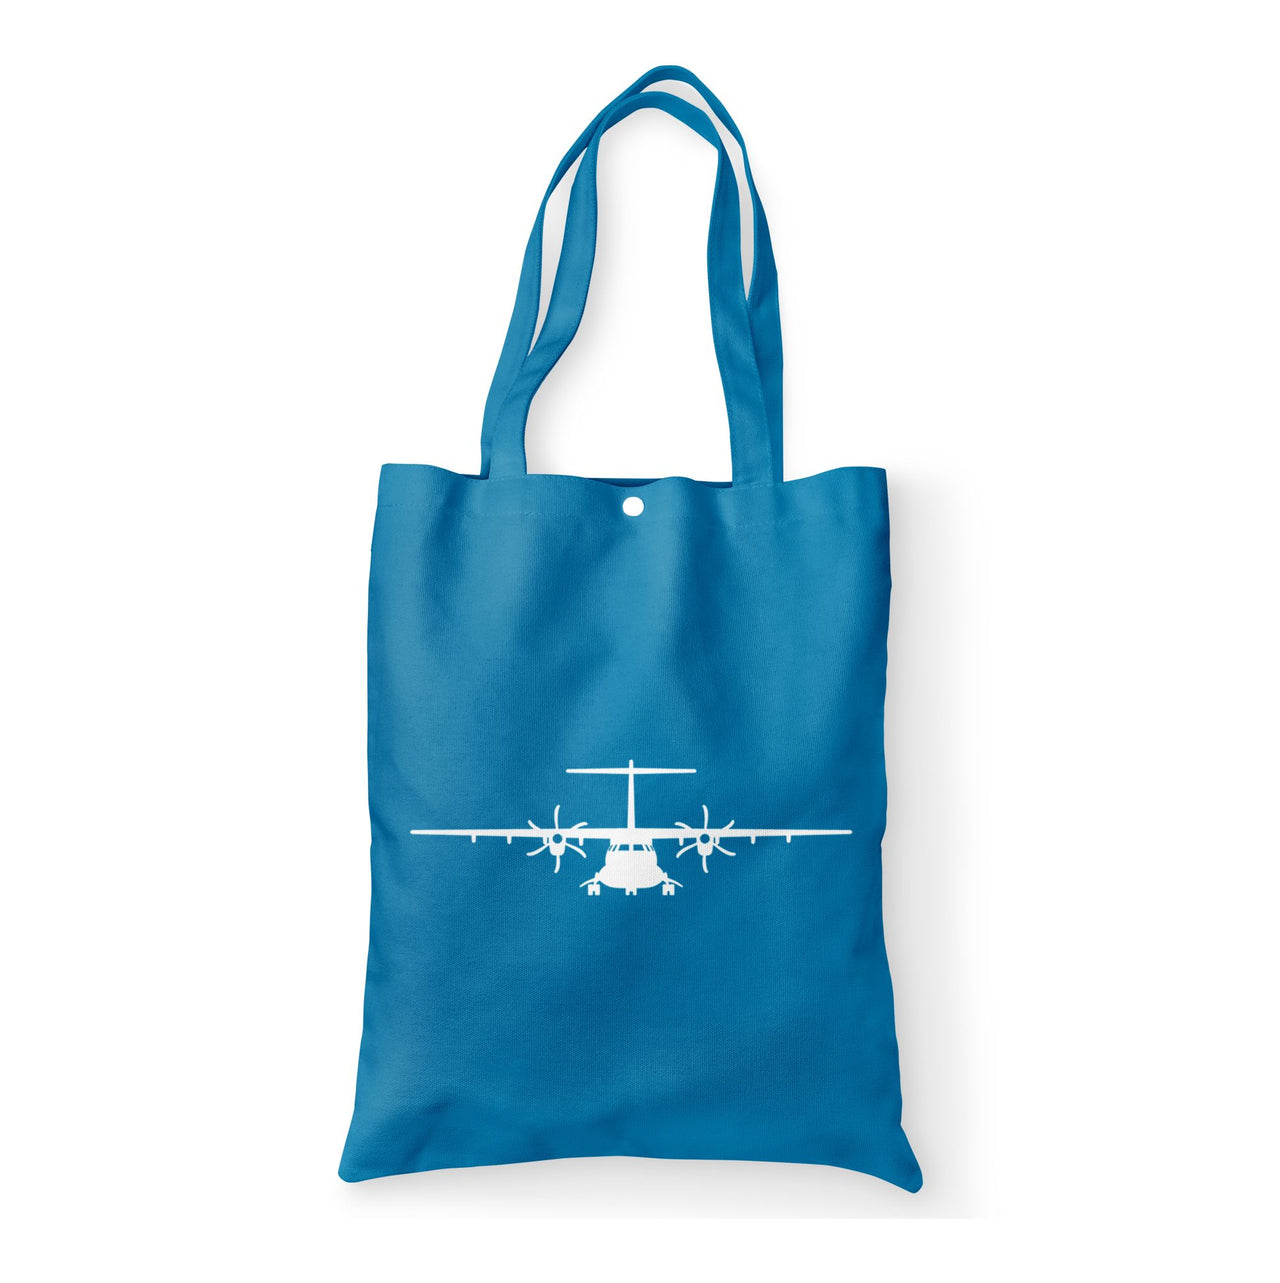 ATR-72 Silhouette Designed Tote Bags